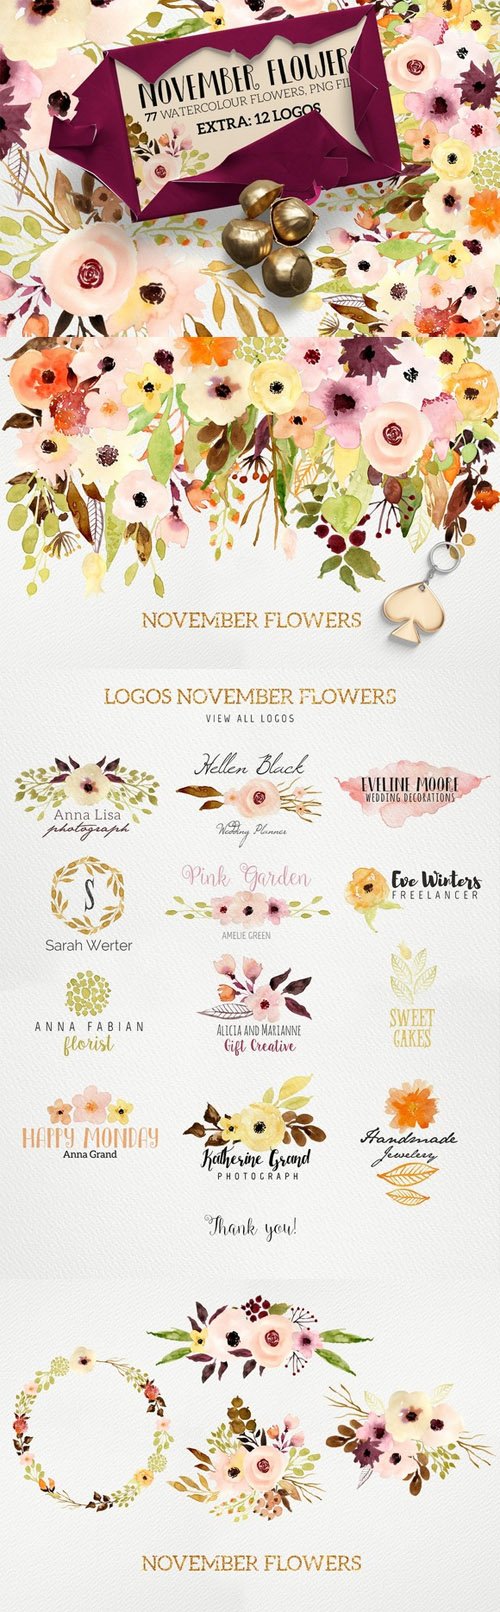 Logos and November Flowers - Creativemarket 429313